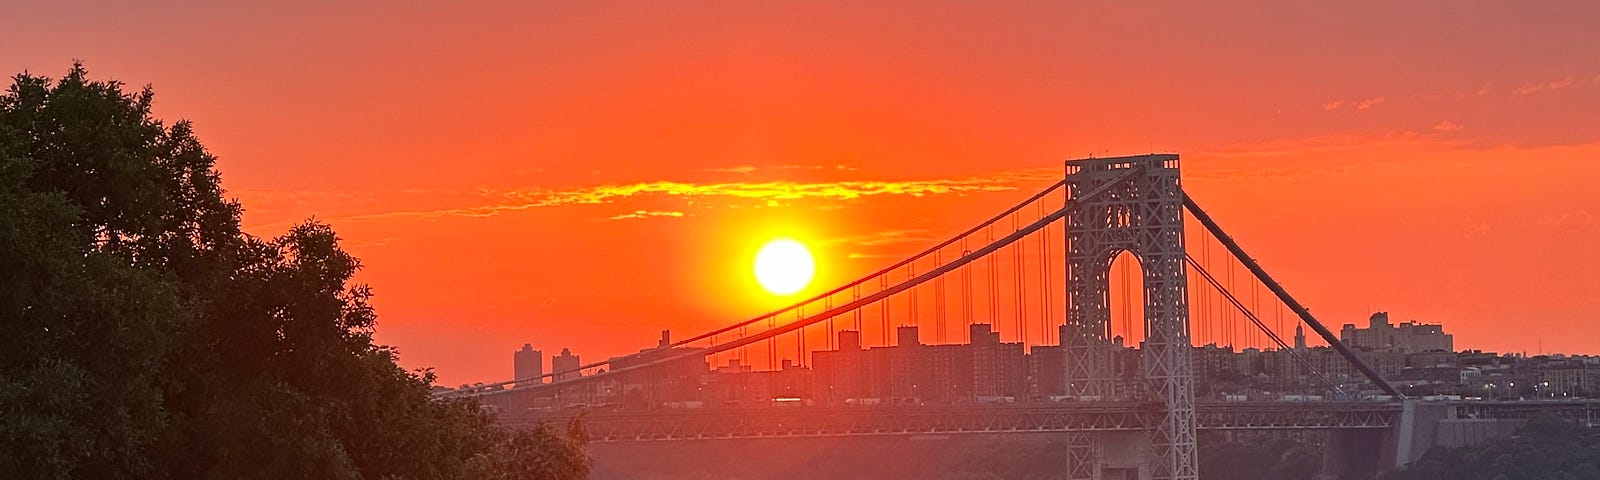 Sunrise with the George Washington Bridge in New York